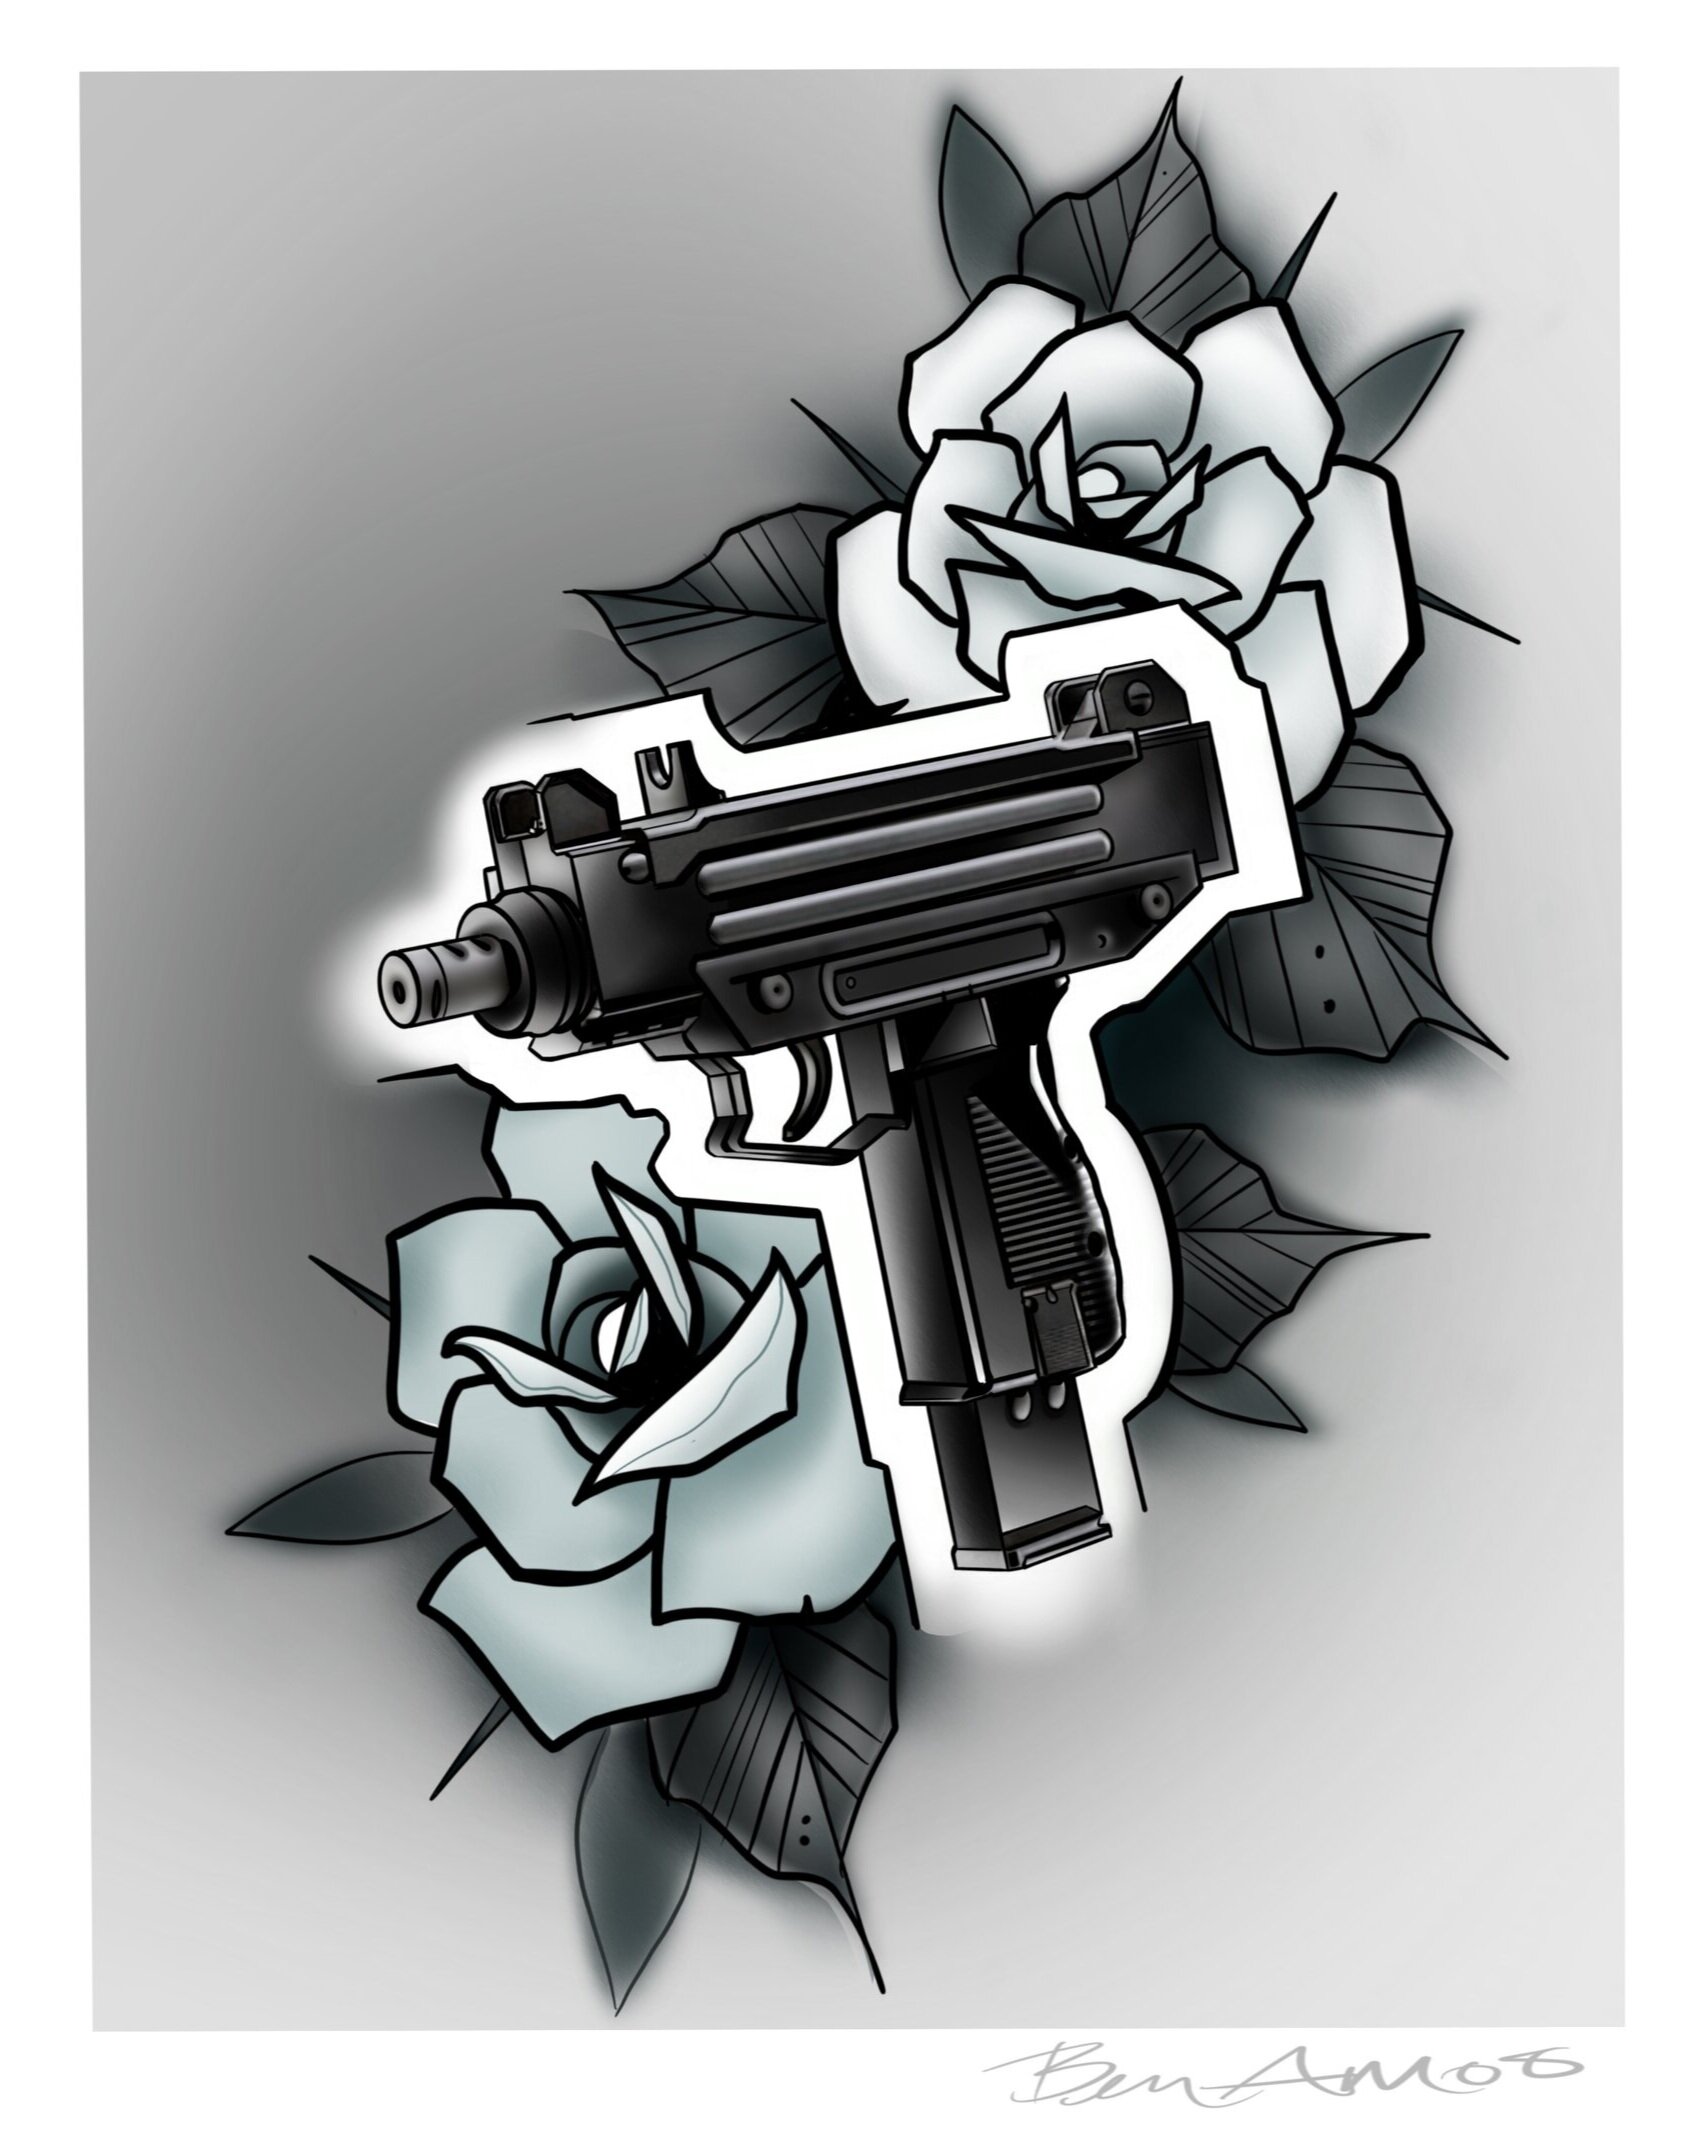 Black Machine Gun tattoo sketch at theYoucom